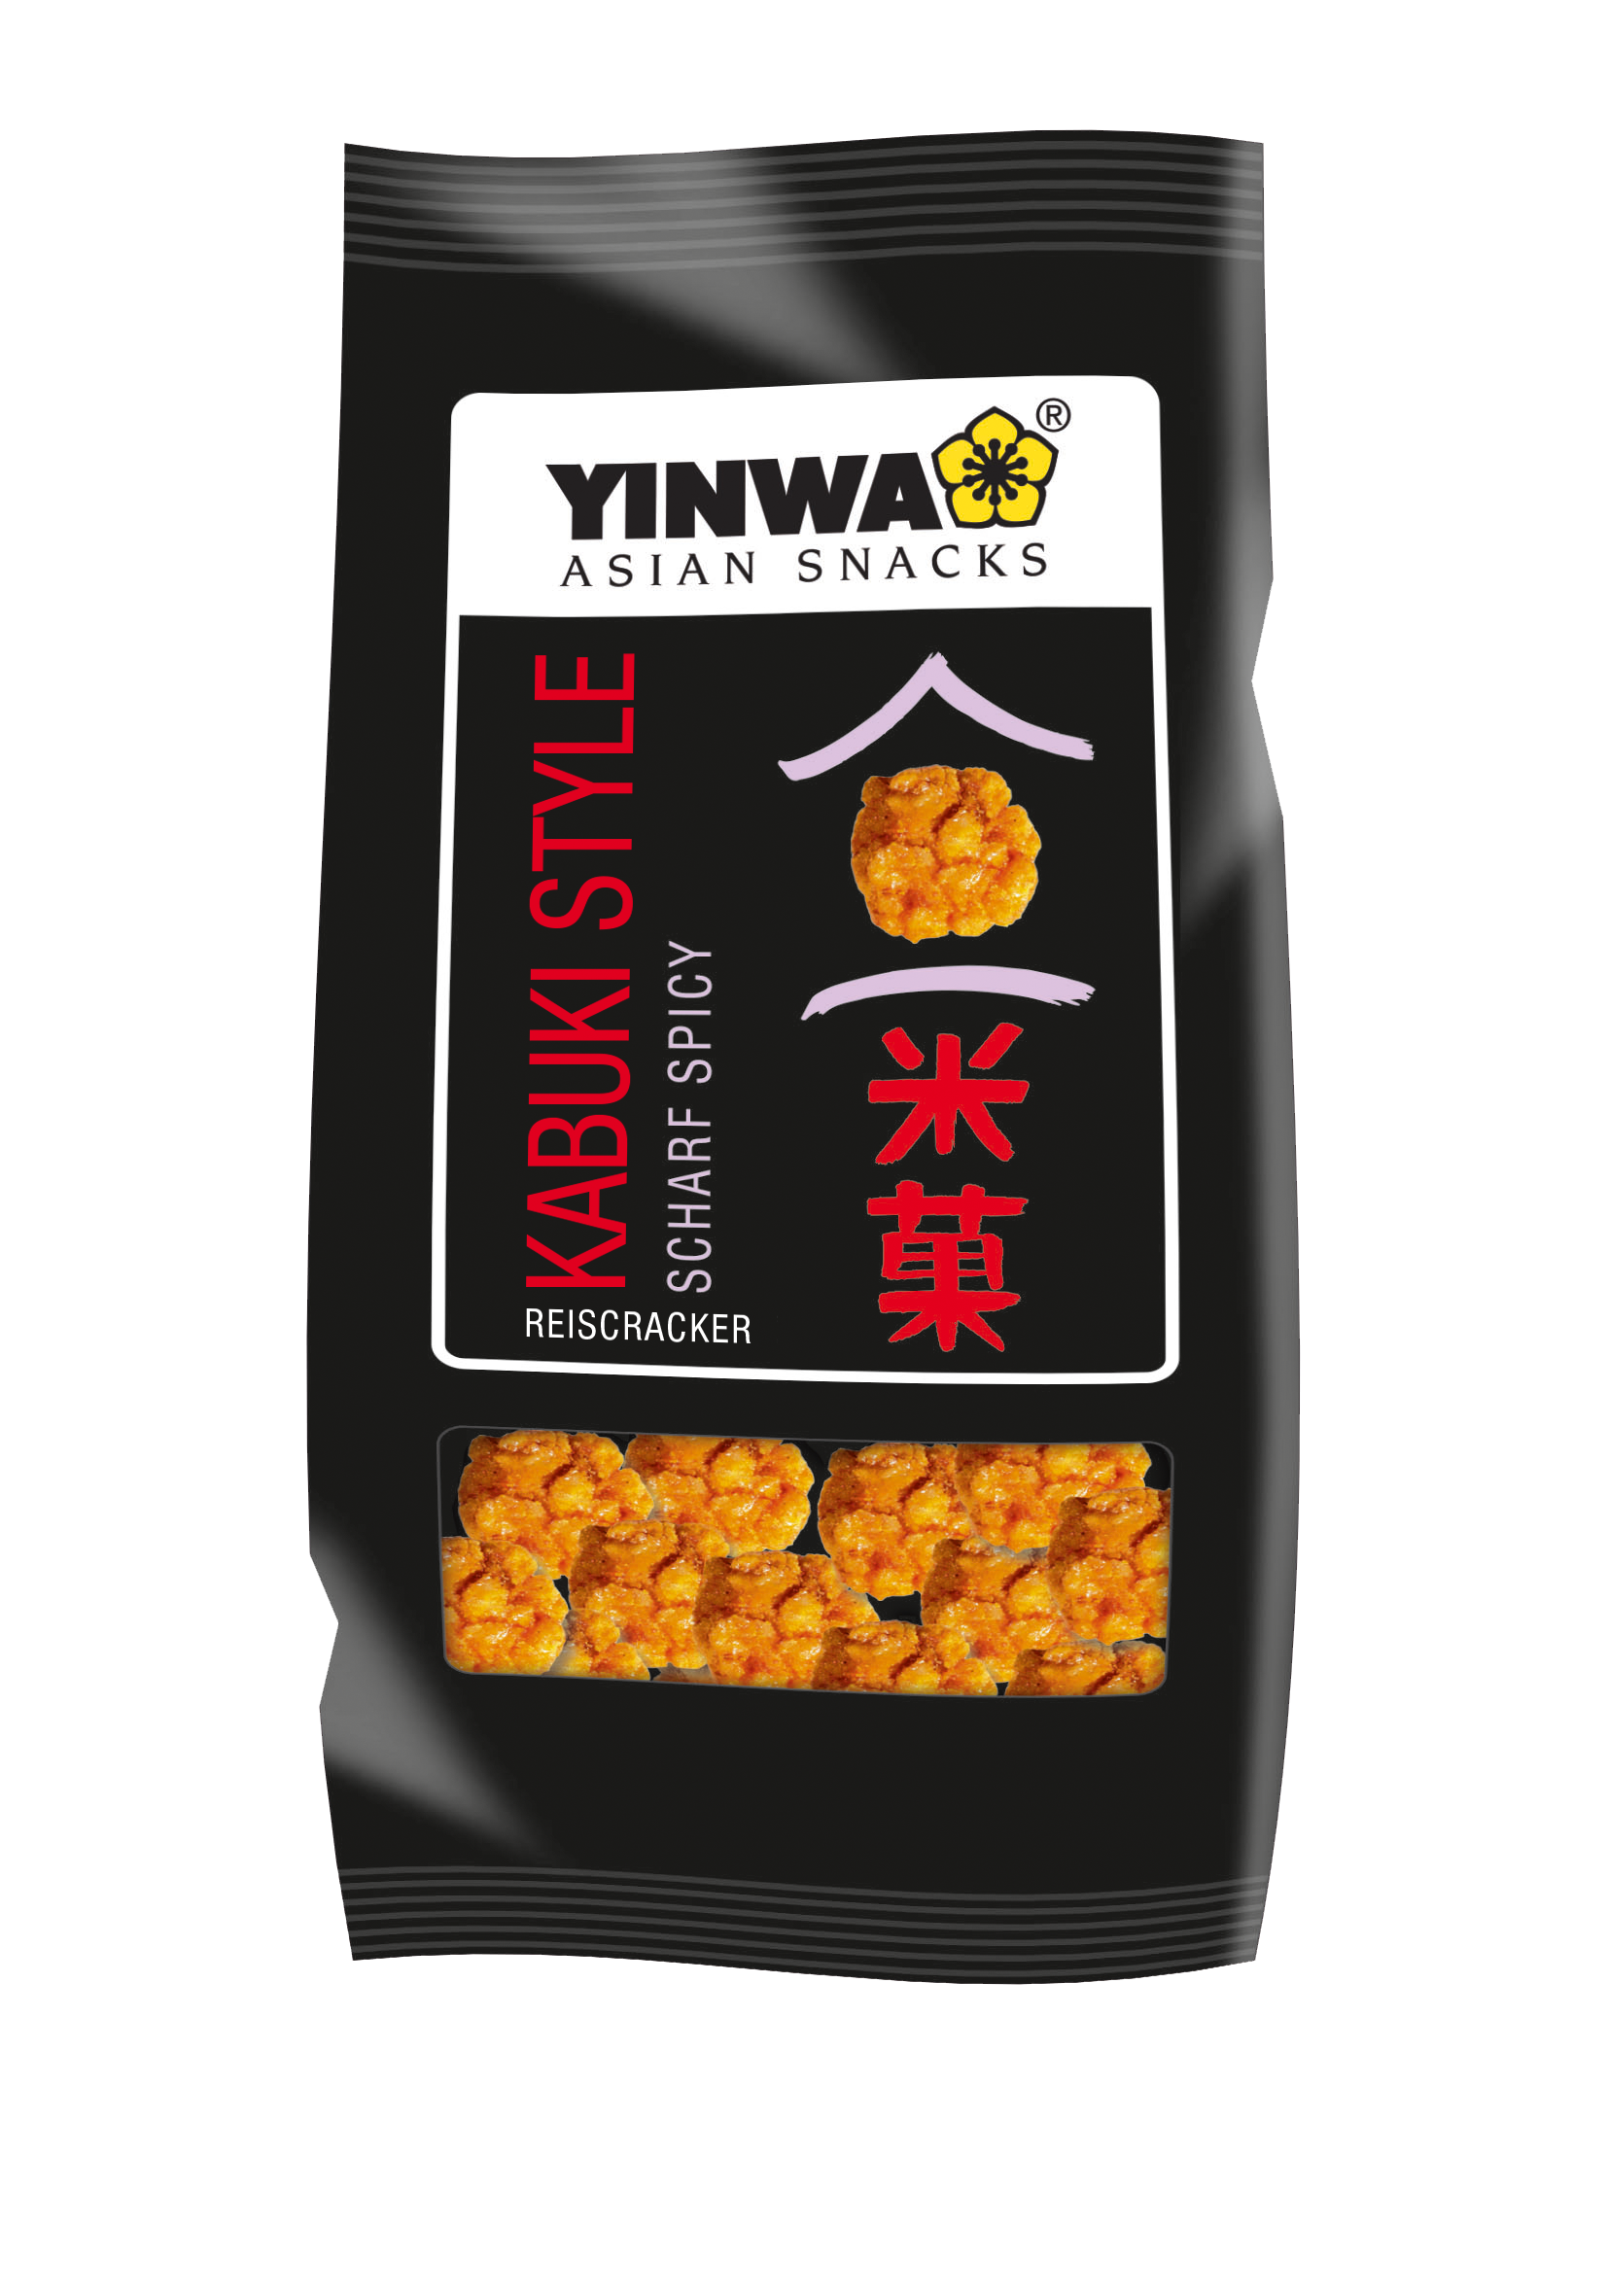 Yinwa Asian Snacks - Reisgebäck - Wasabi-Snacks und mehr